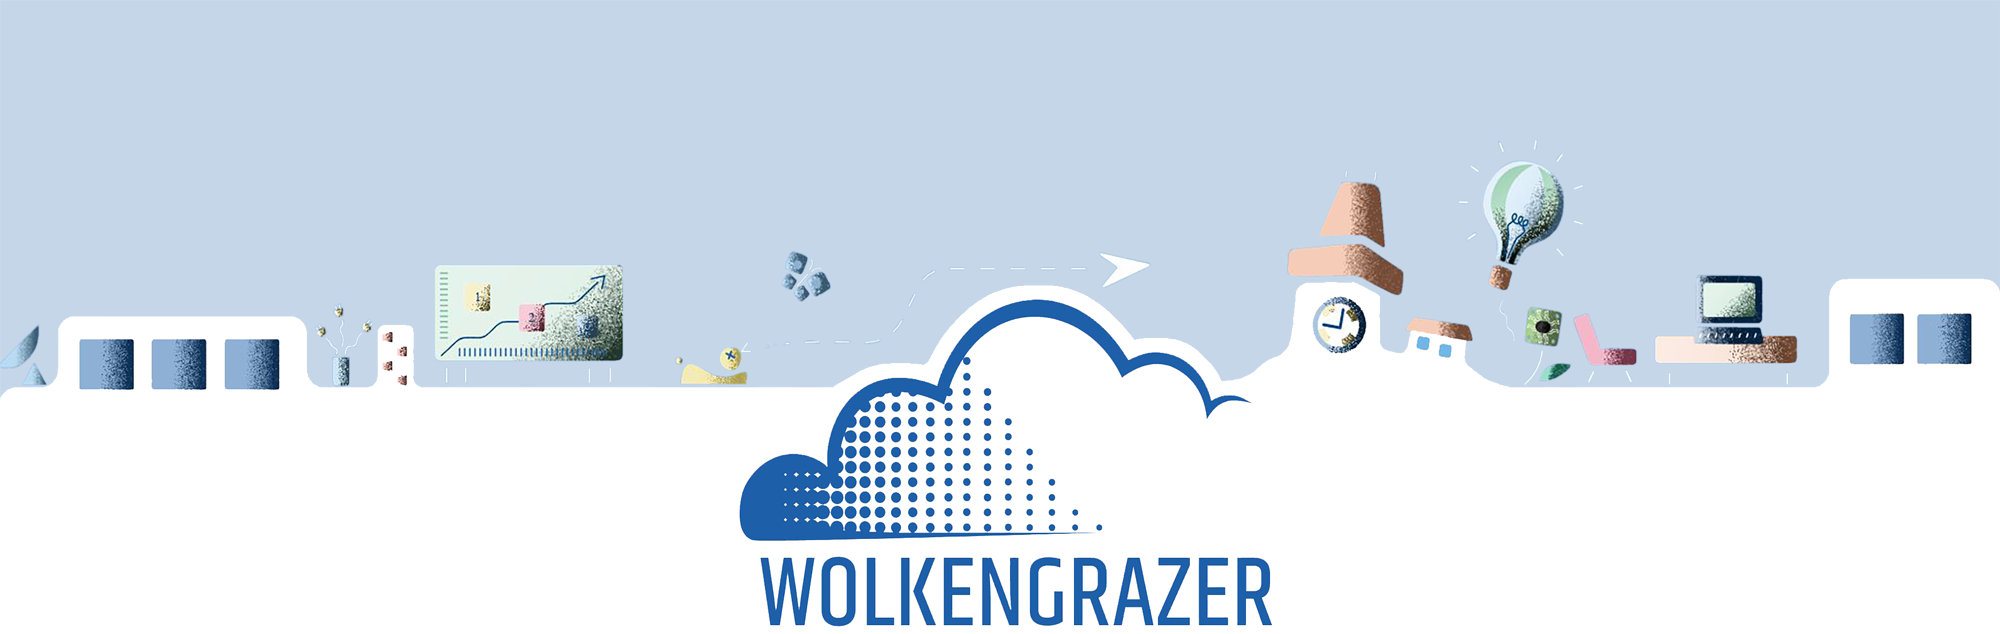 Wolkengrazer Homepage